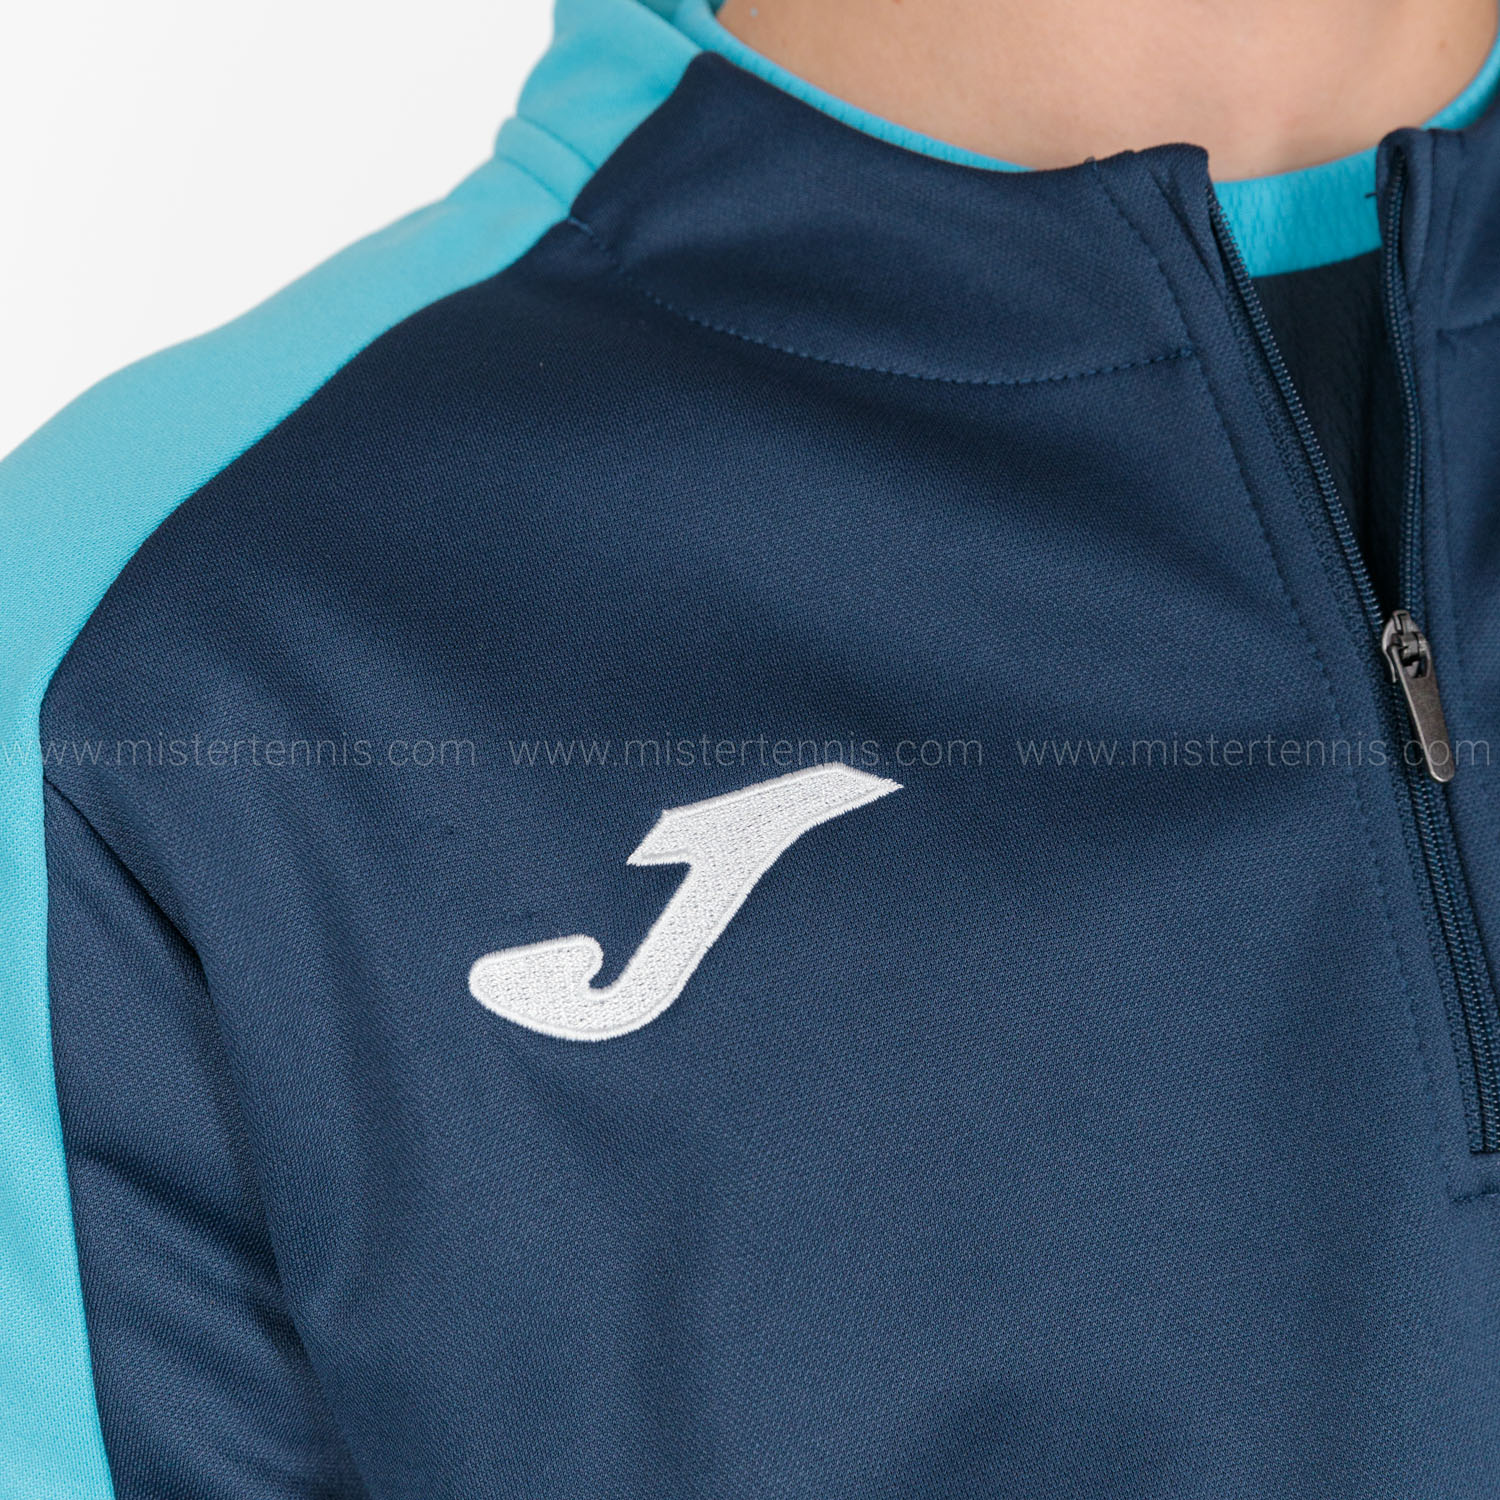 Joma Eco Championship Camisa - Navy/Fluor Turquoise